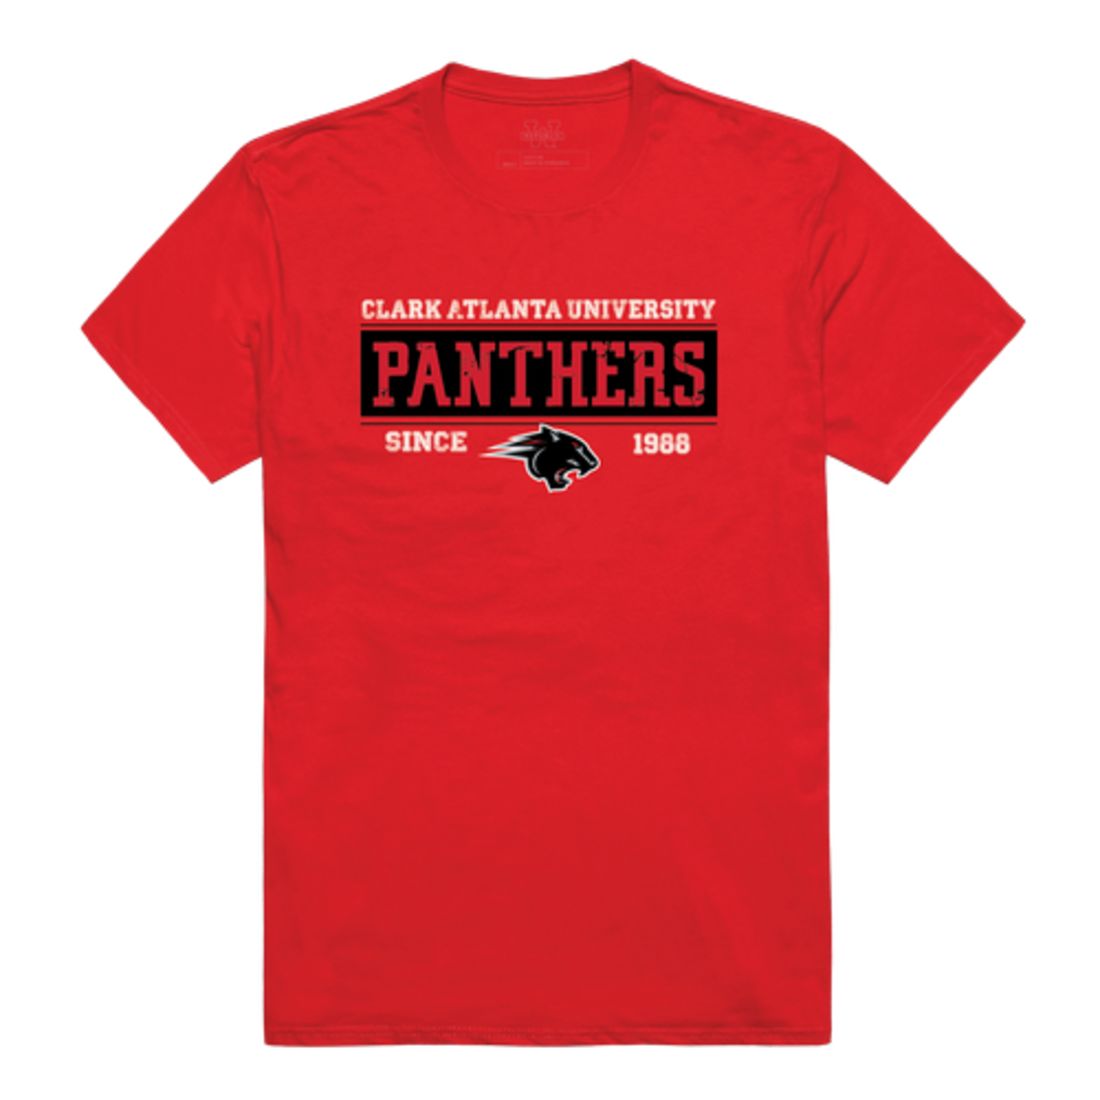 Clark Atlanta University Panthers Established T-Shirt